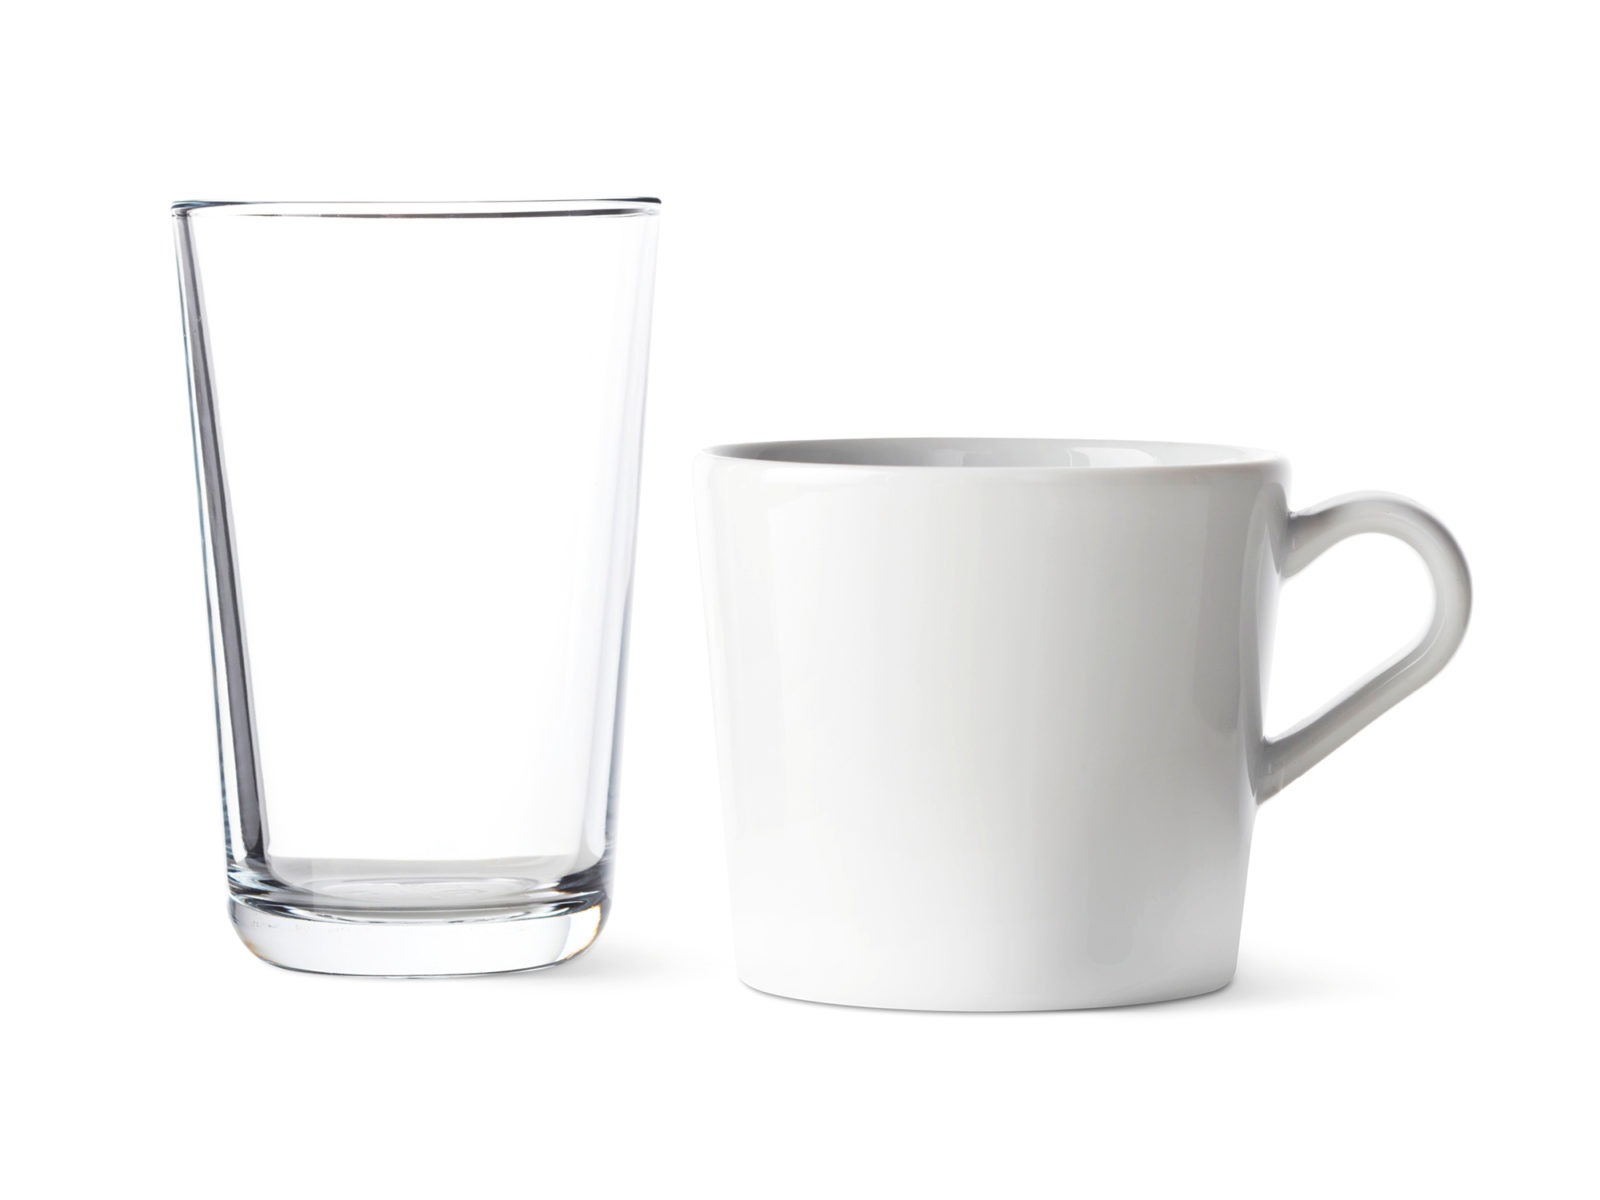 Glass and white mug, against white background.